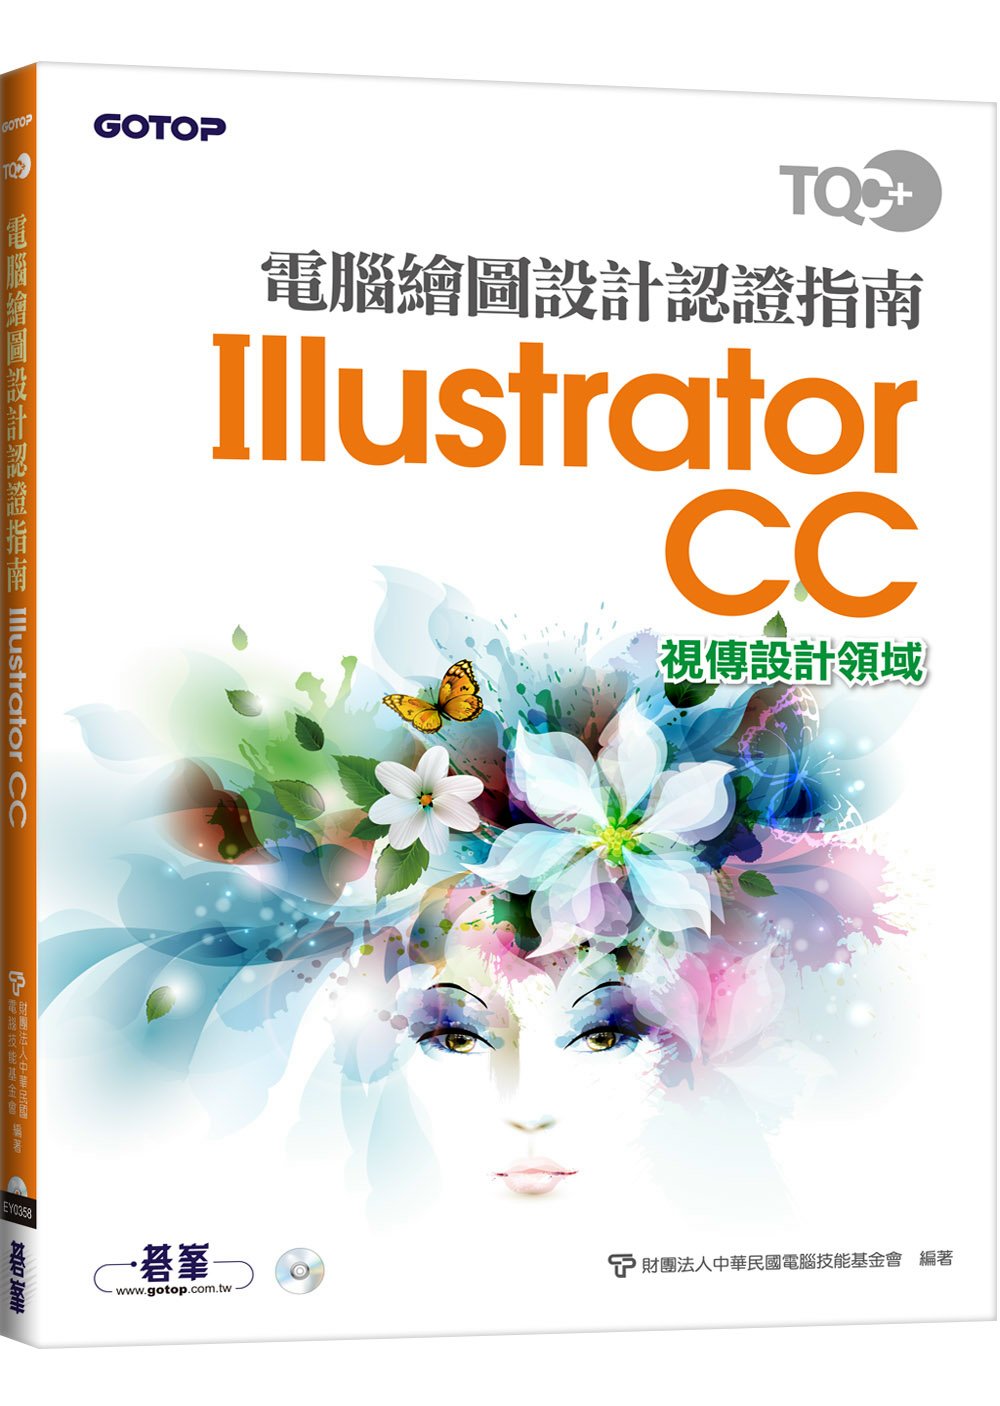 ►GO►最新優惠► 【書籍】TQC+ 電腦繪圖設計認證指南 Illustrator CC